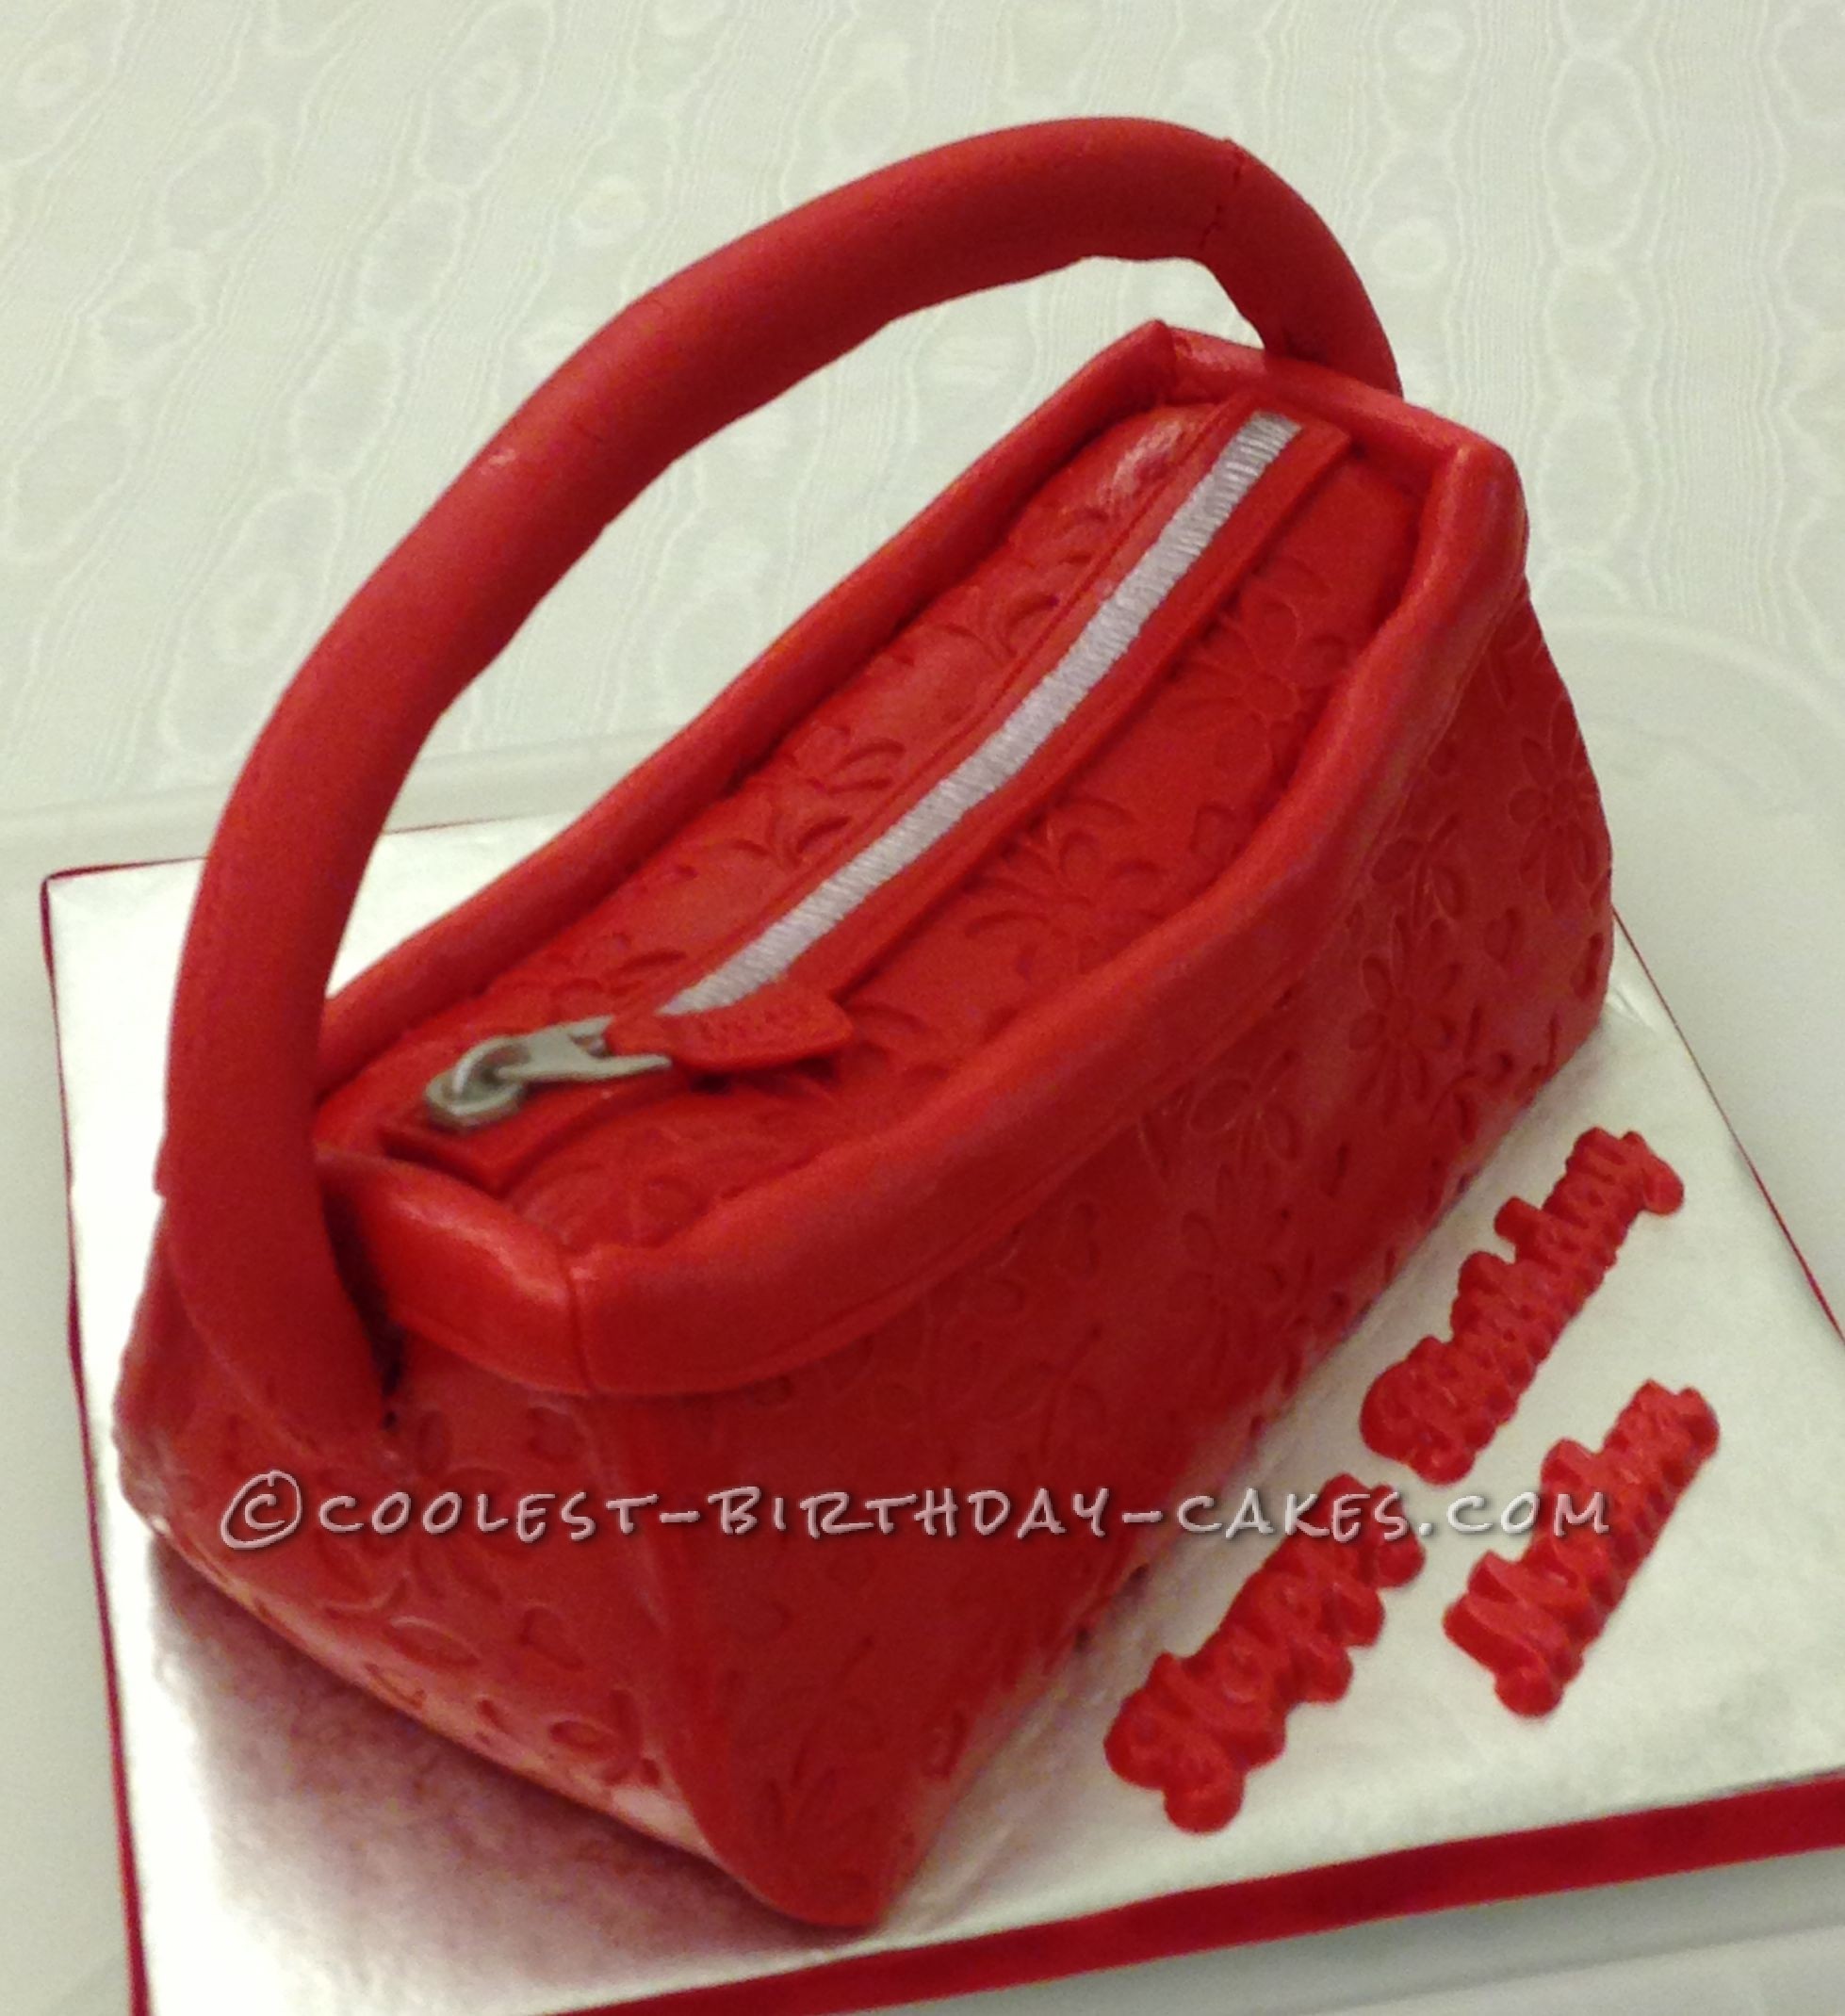 Purse cake | Purse cake, Handbag cakes, Ruffle cake